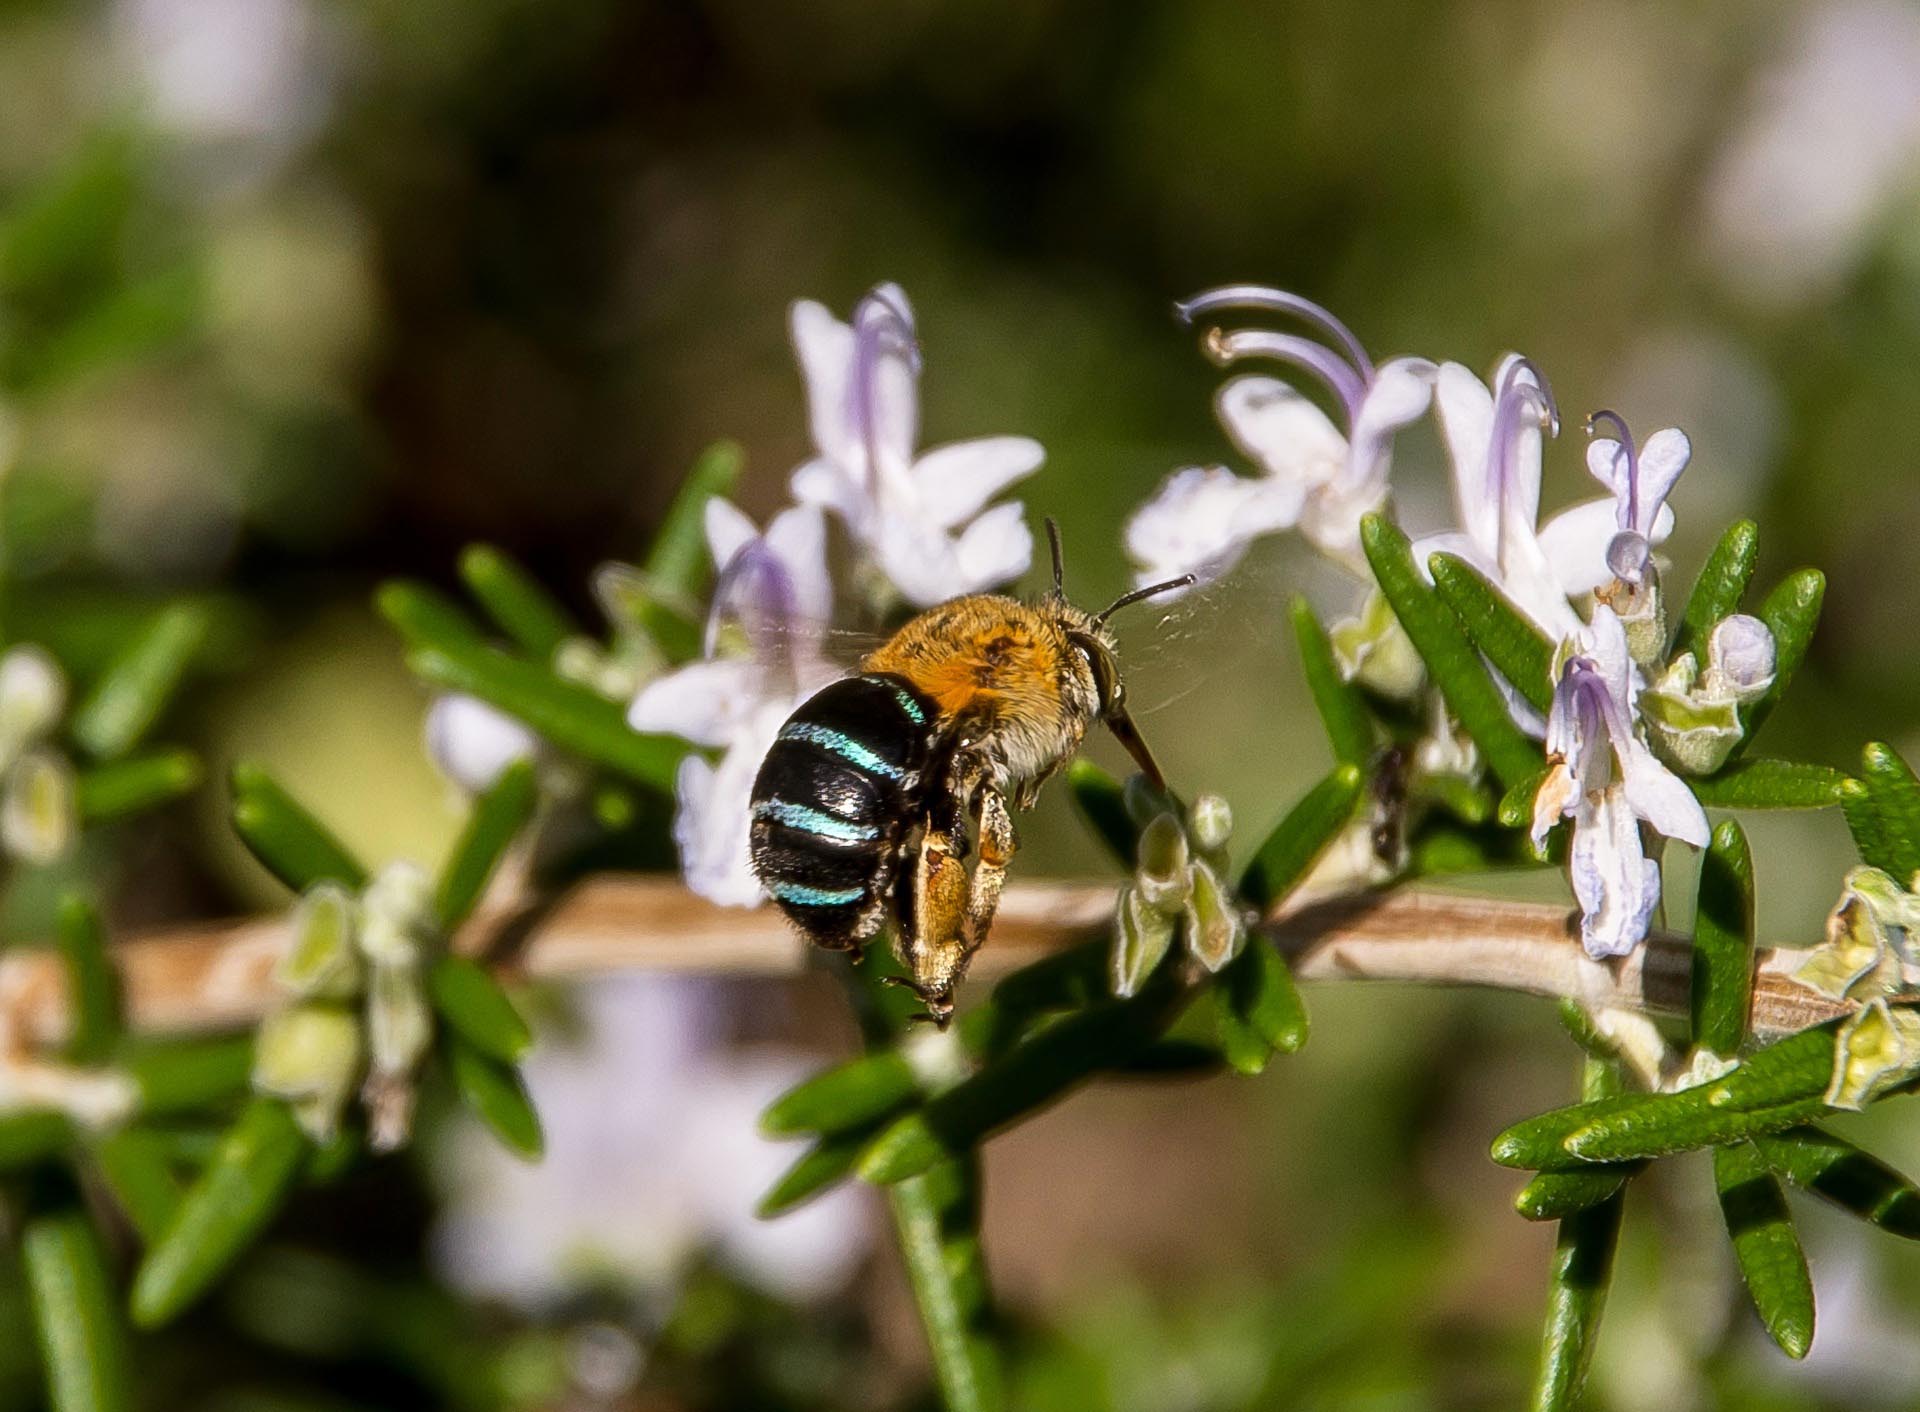 An Australian native Blue Banded Bee